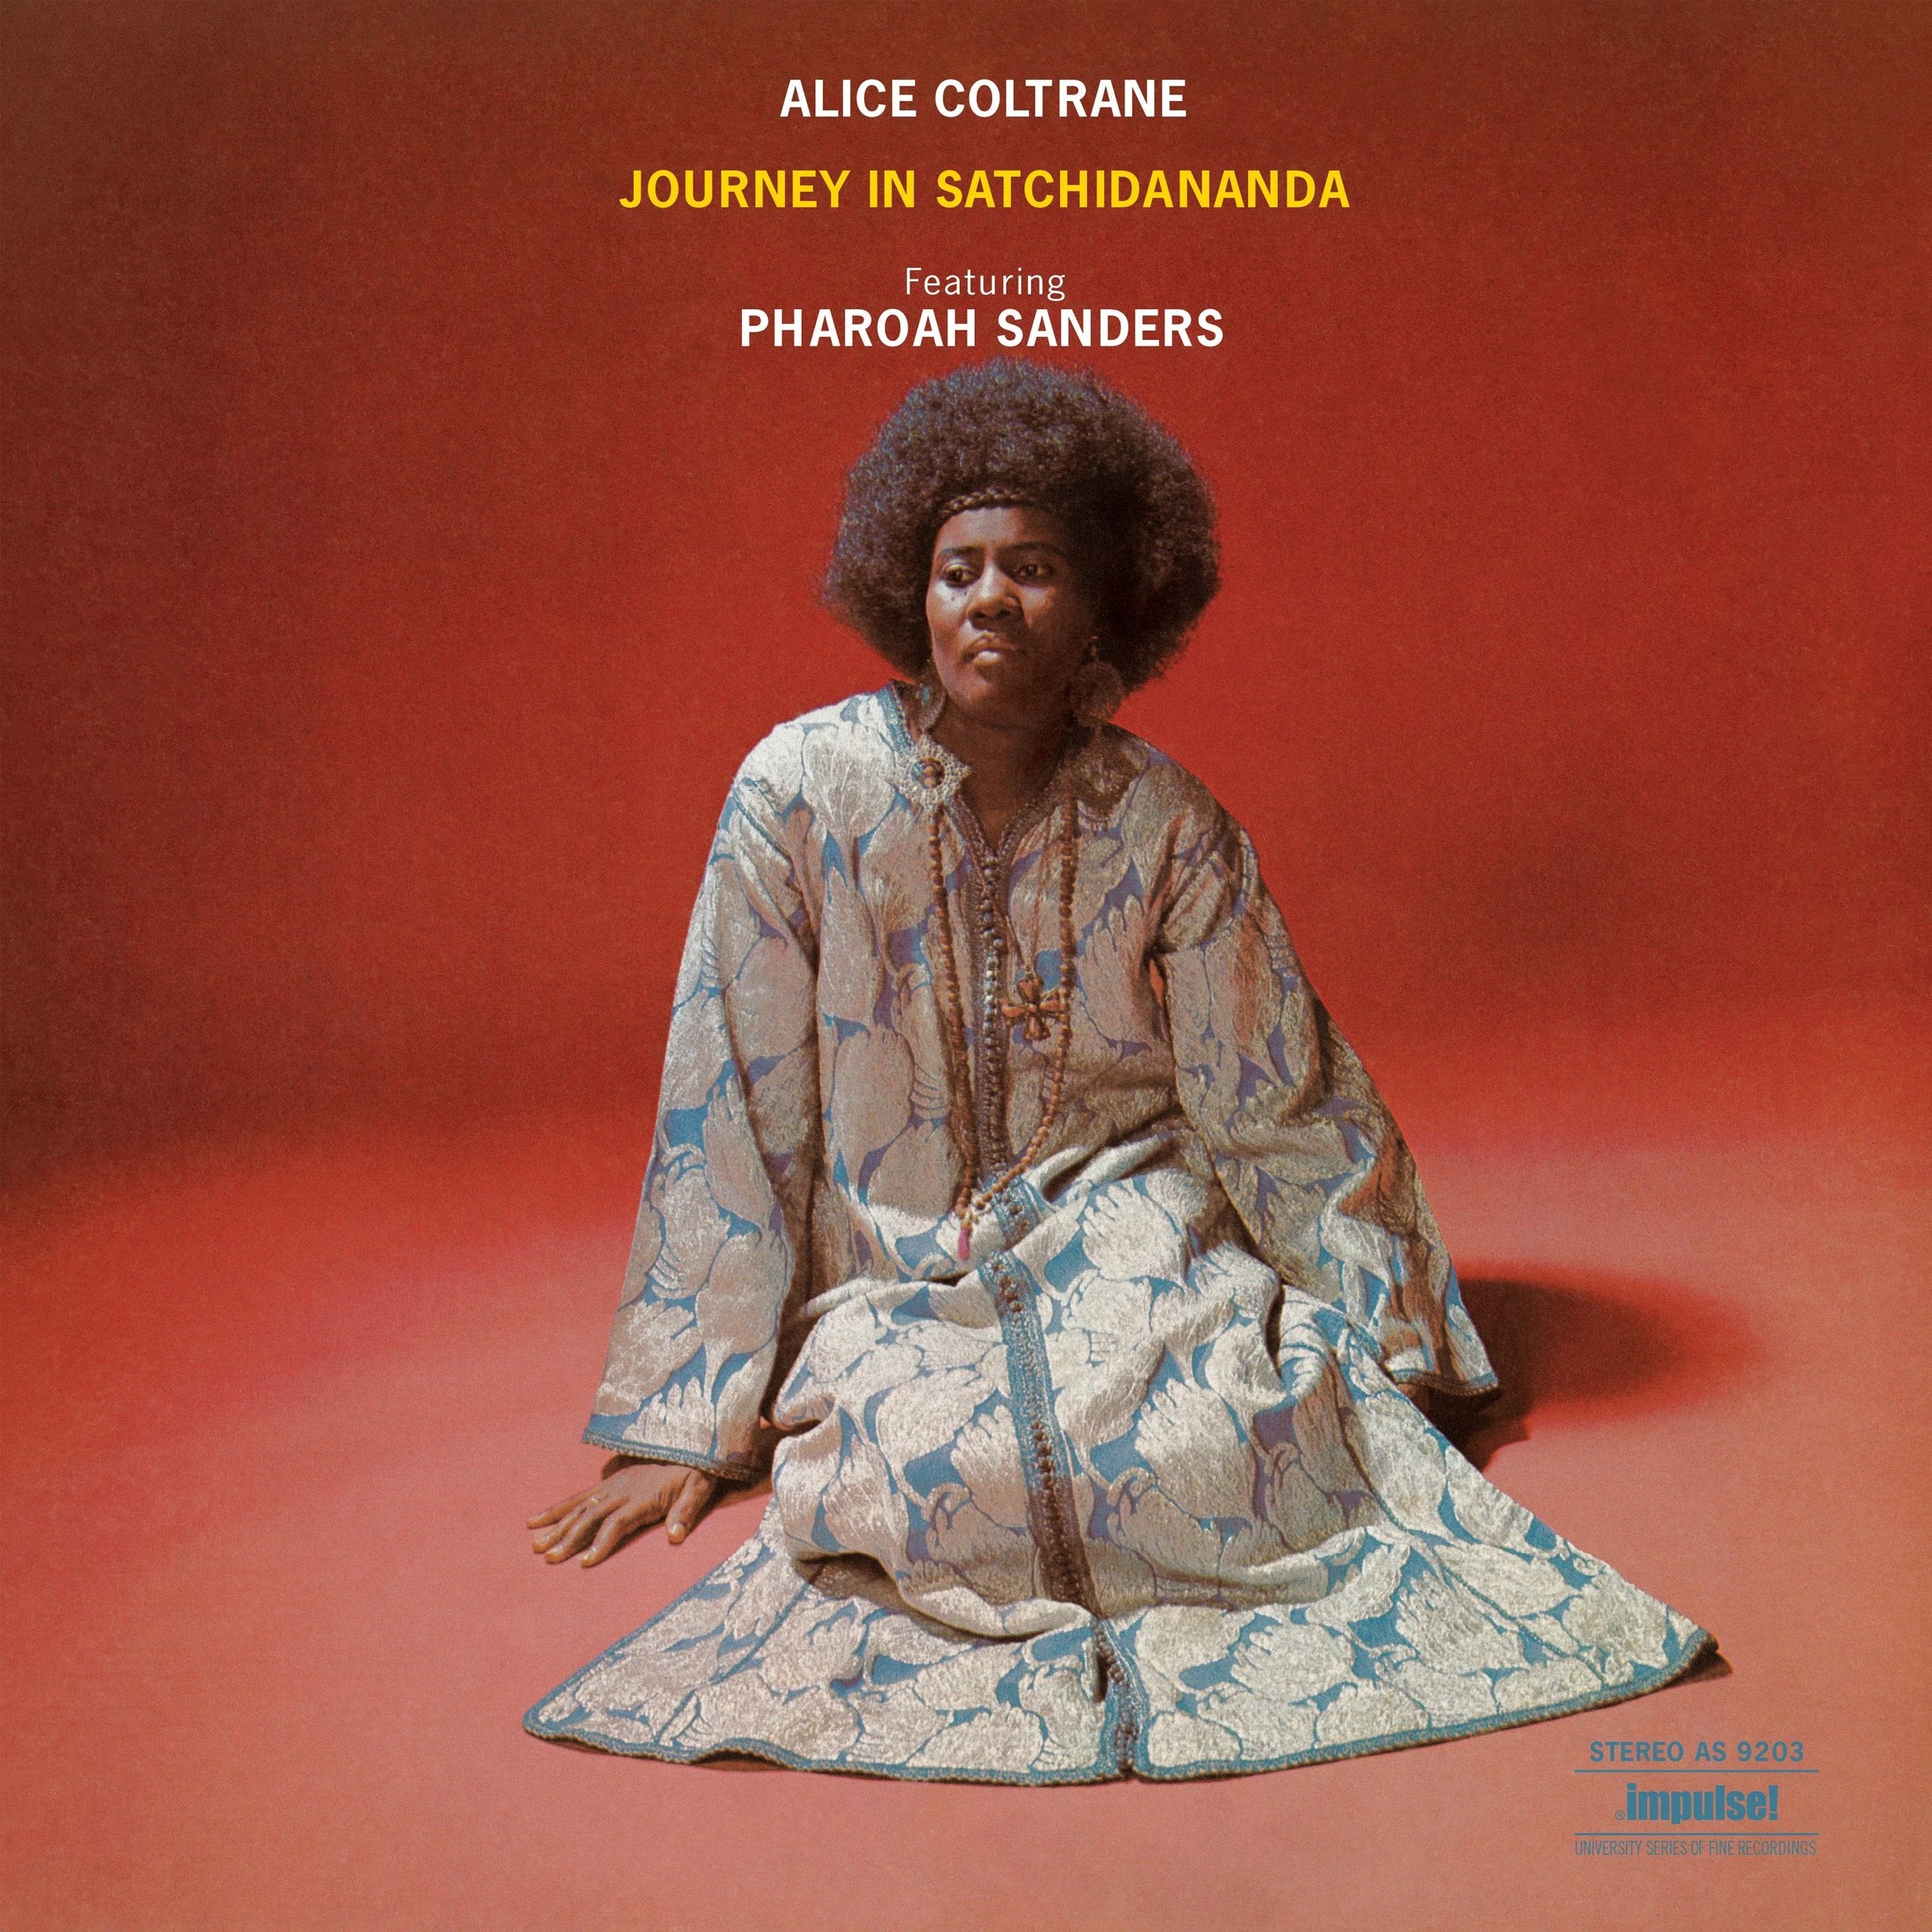 Coltrane, Alice "Journey In Satchidananda" [Acoustic Sounds Series]